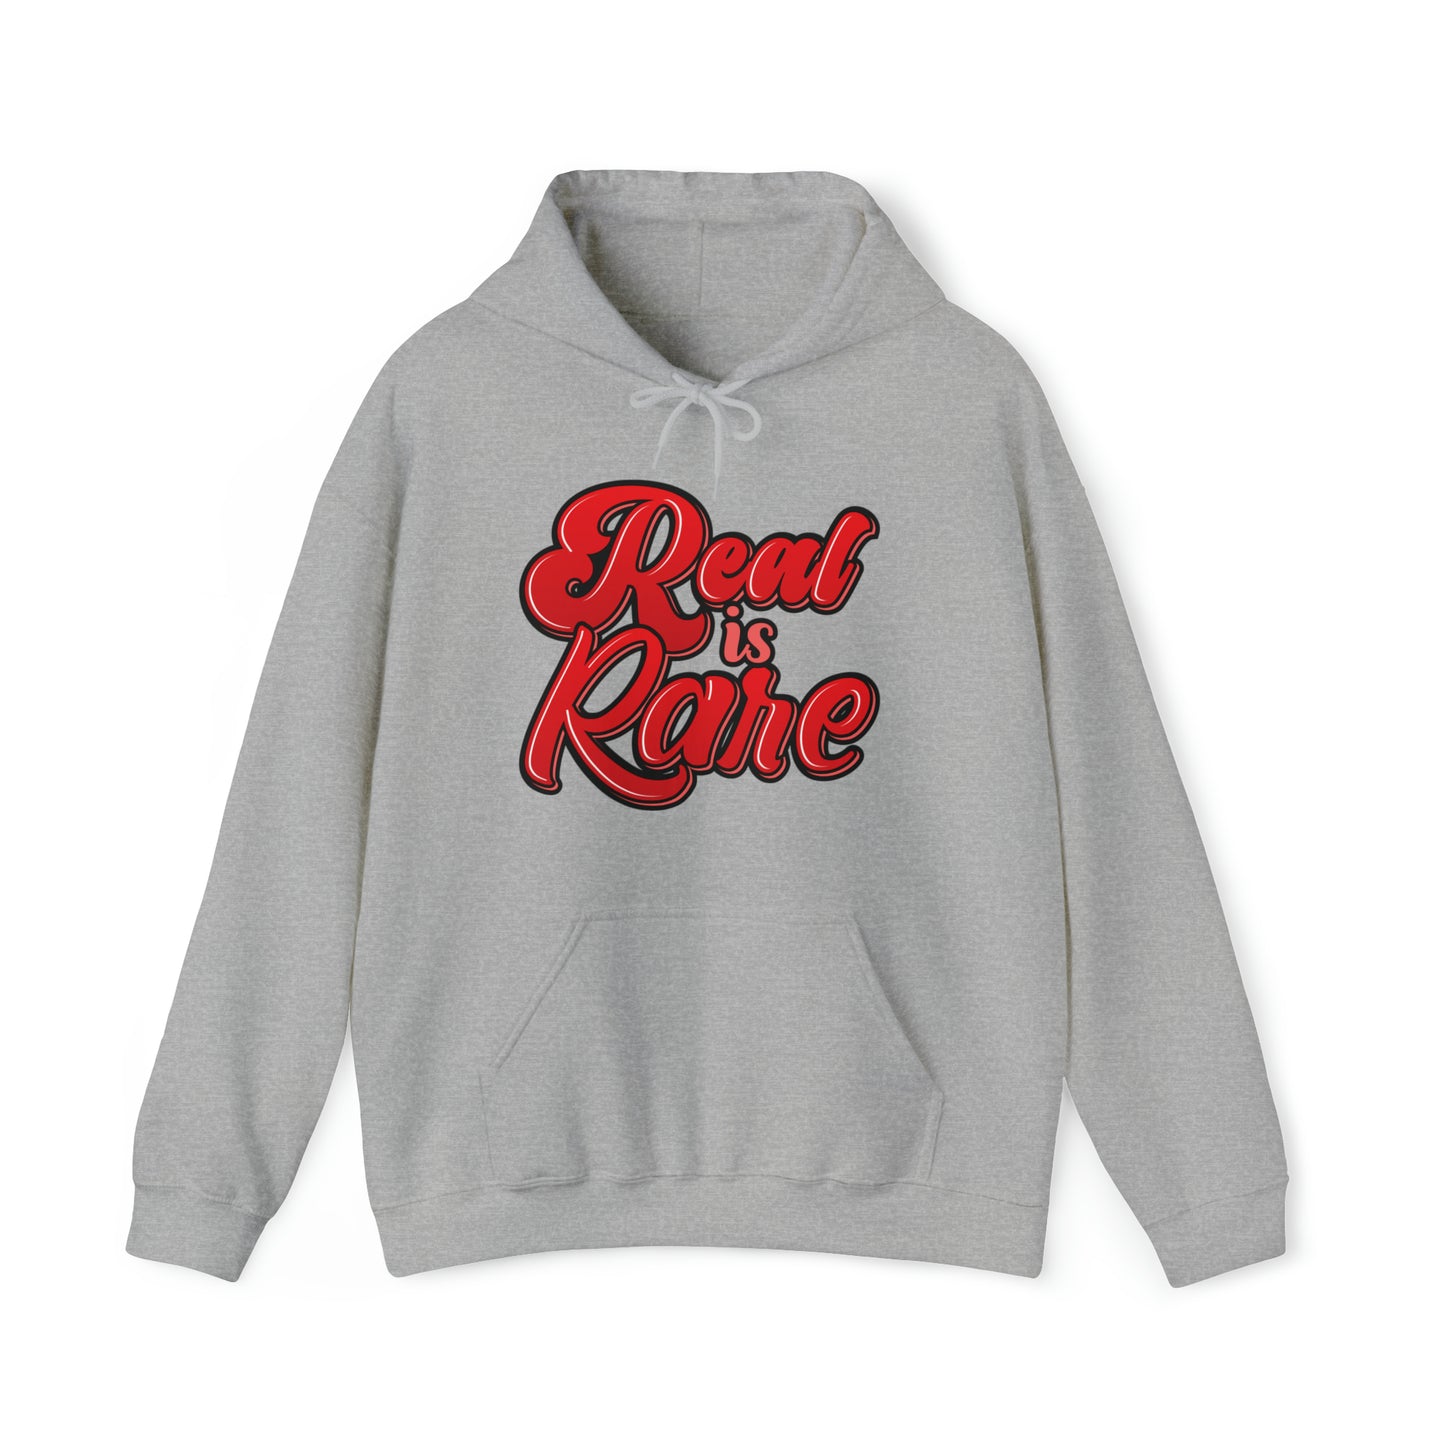 Real is rare hoodie